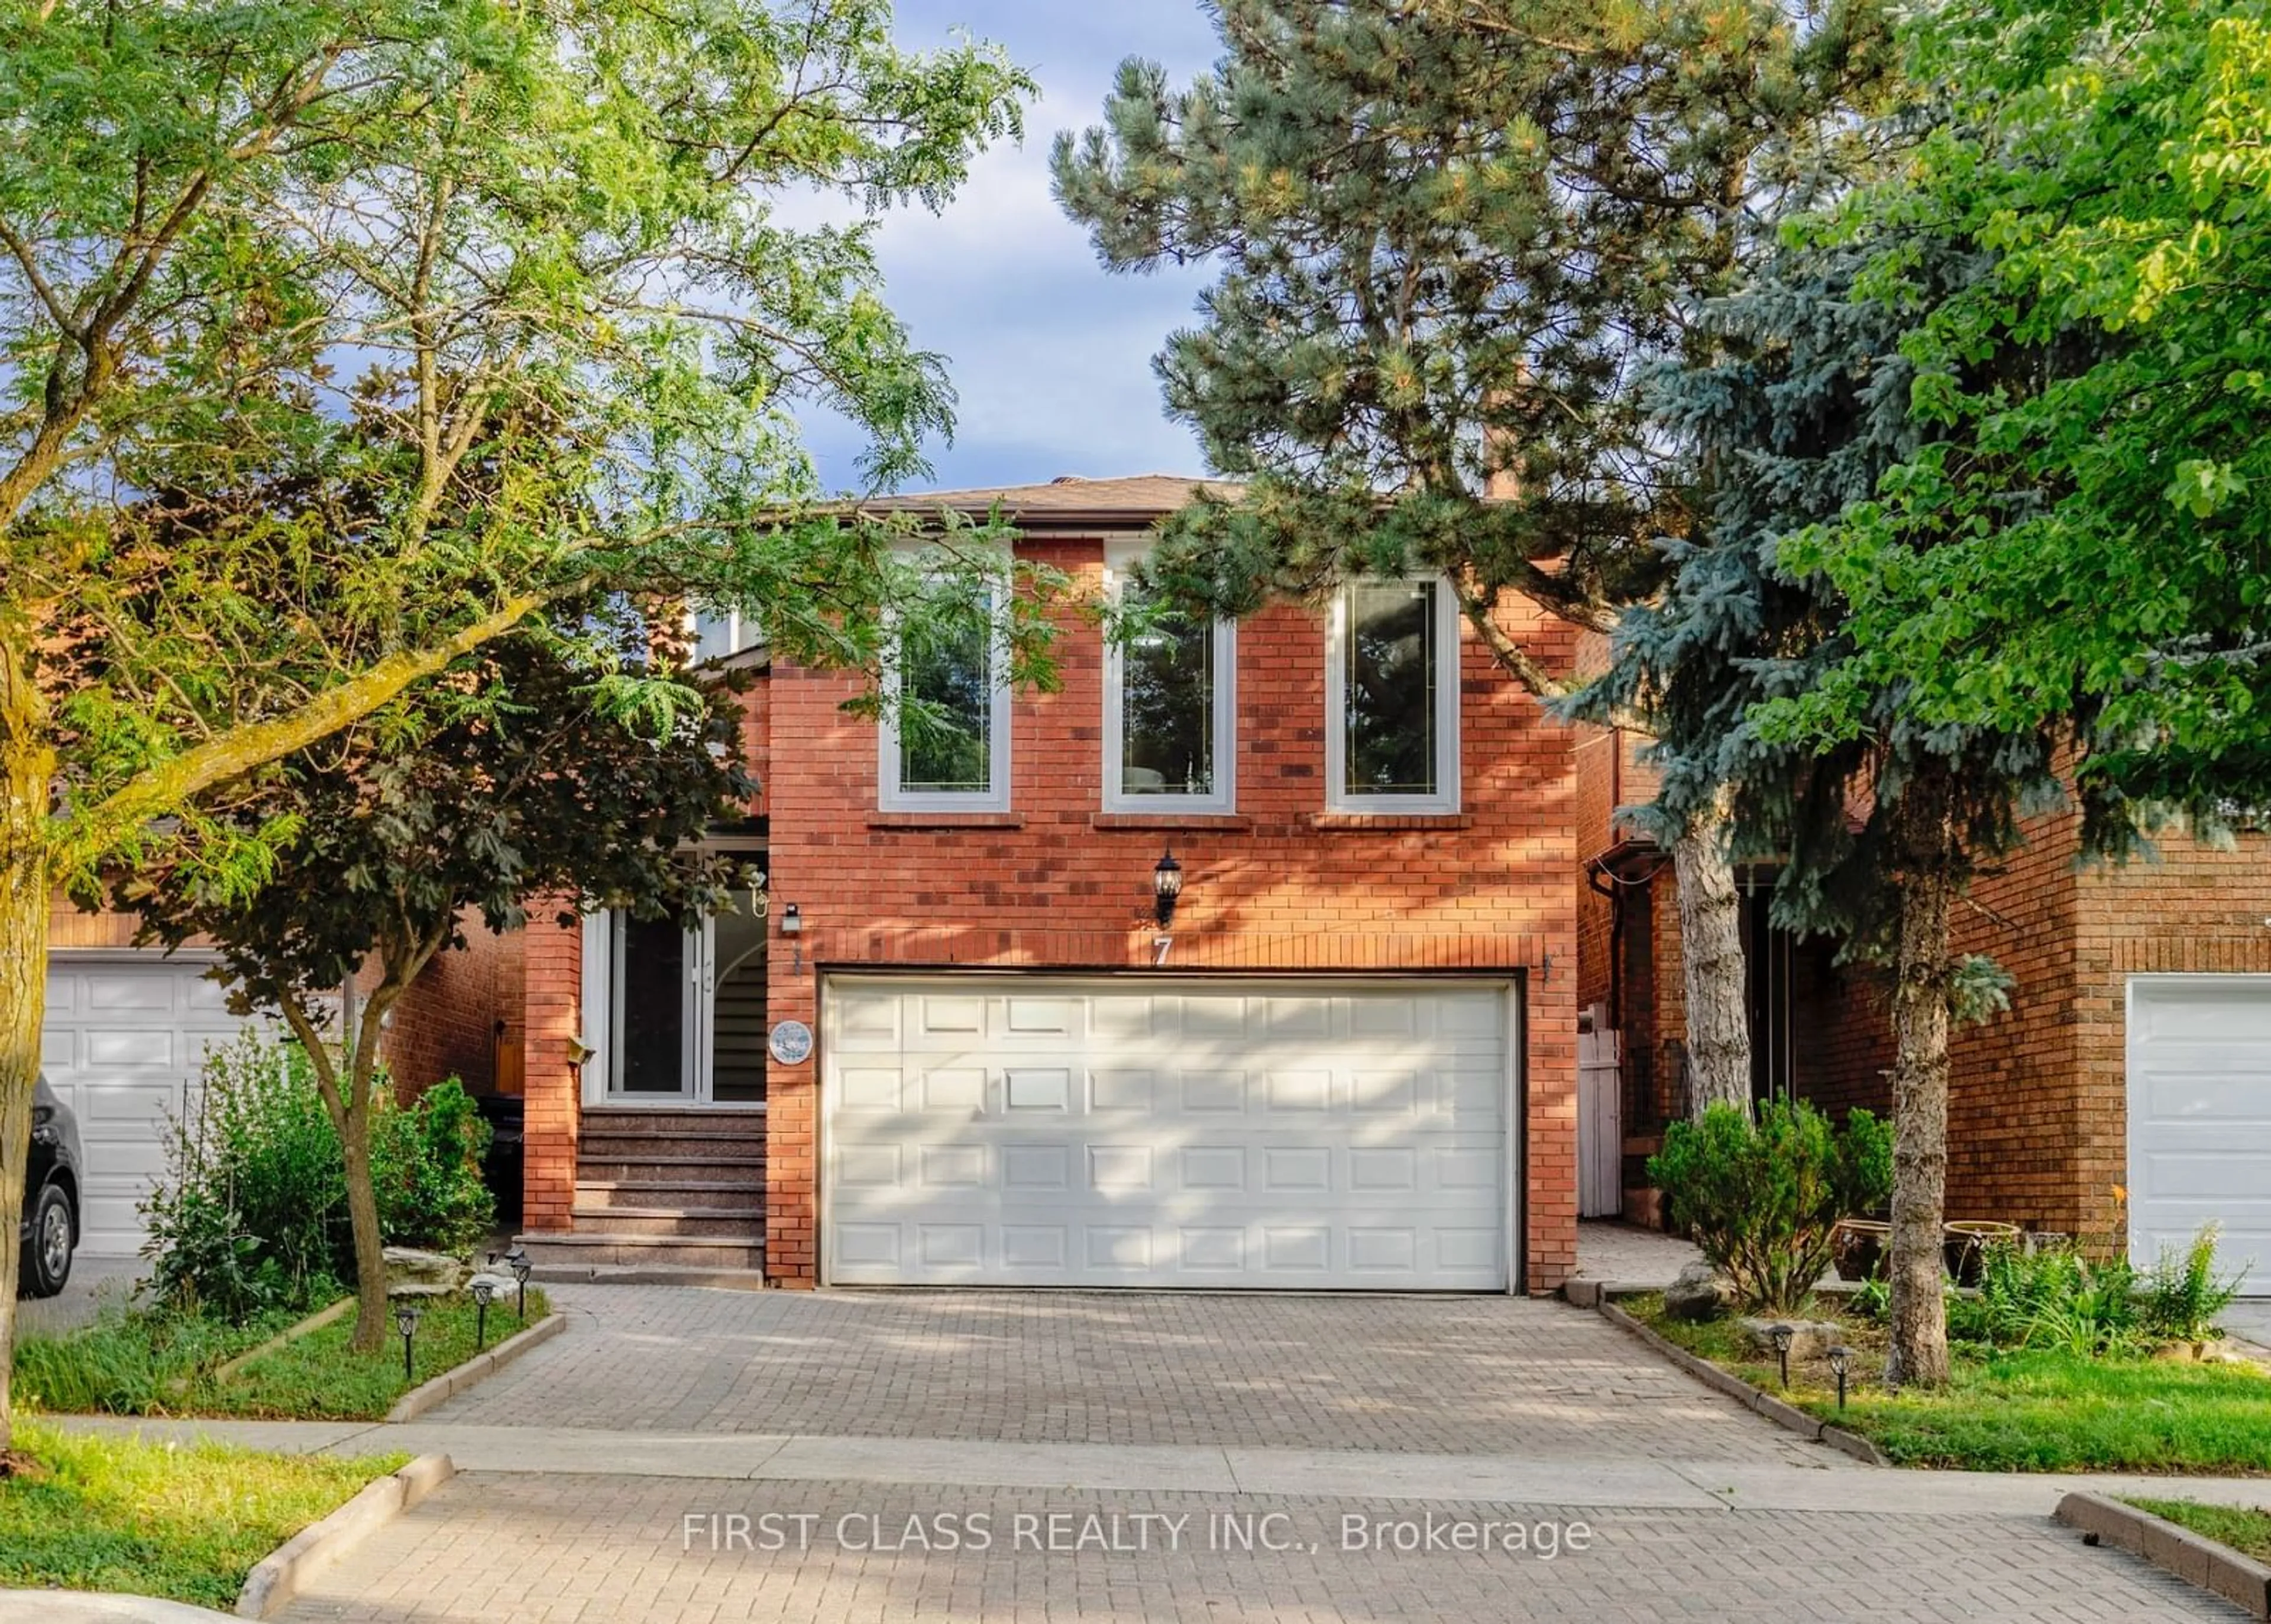 Home with brick exterior material for 7 Treerun Ave, Toronto Ontario M1V 3K8